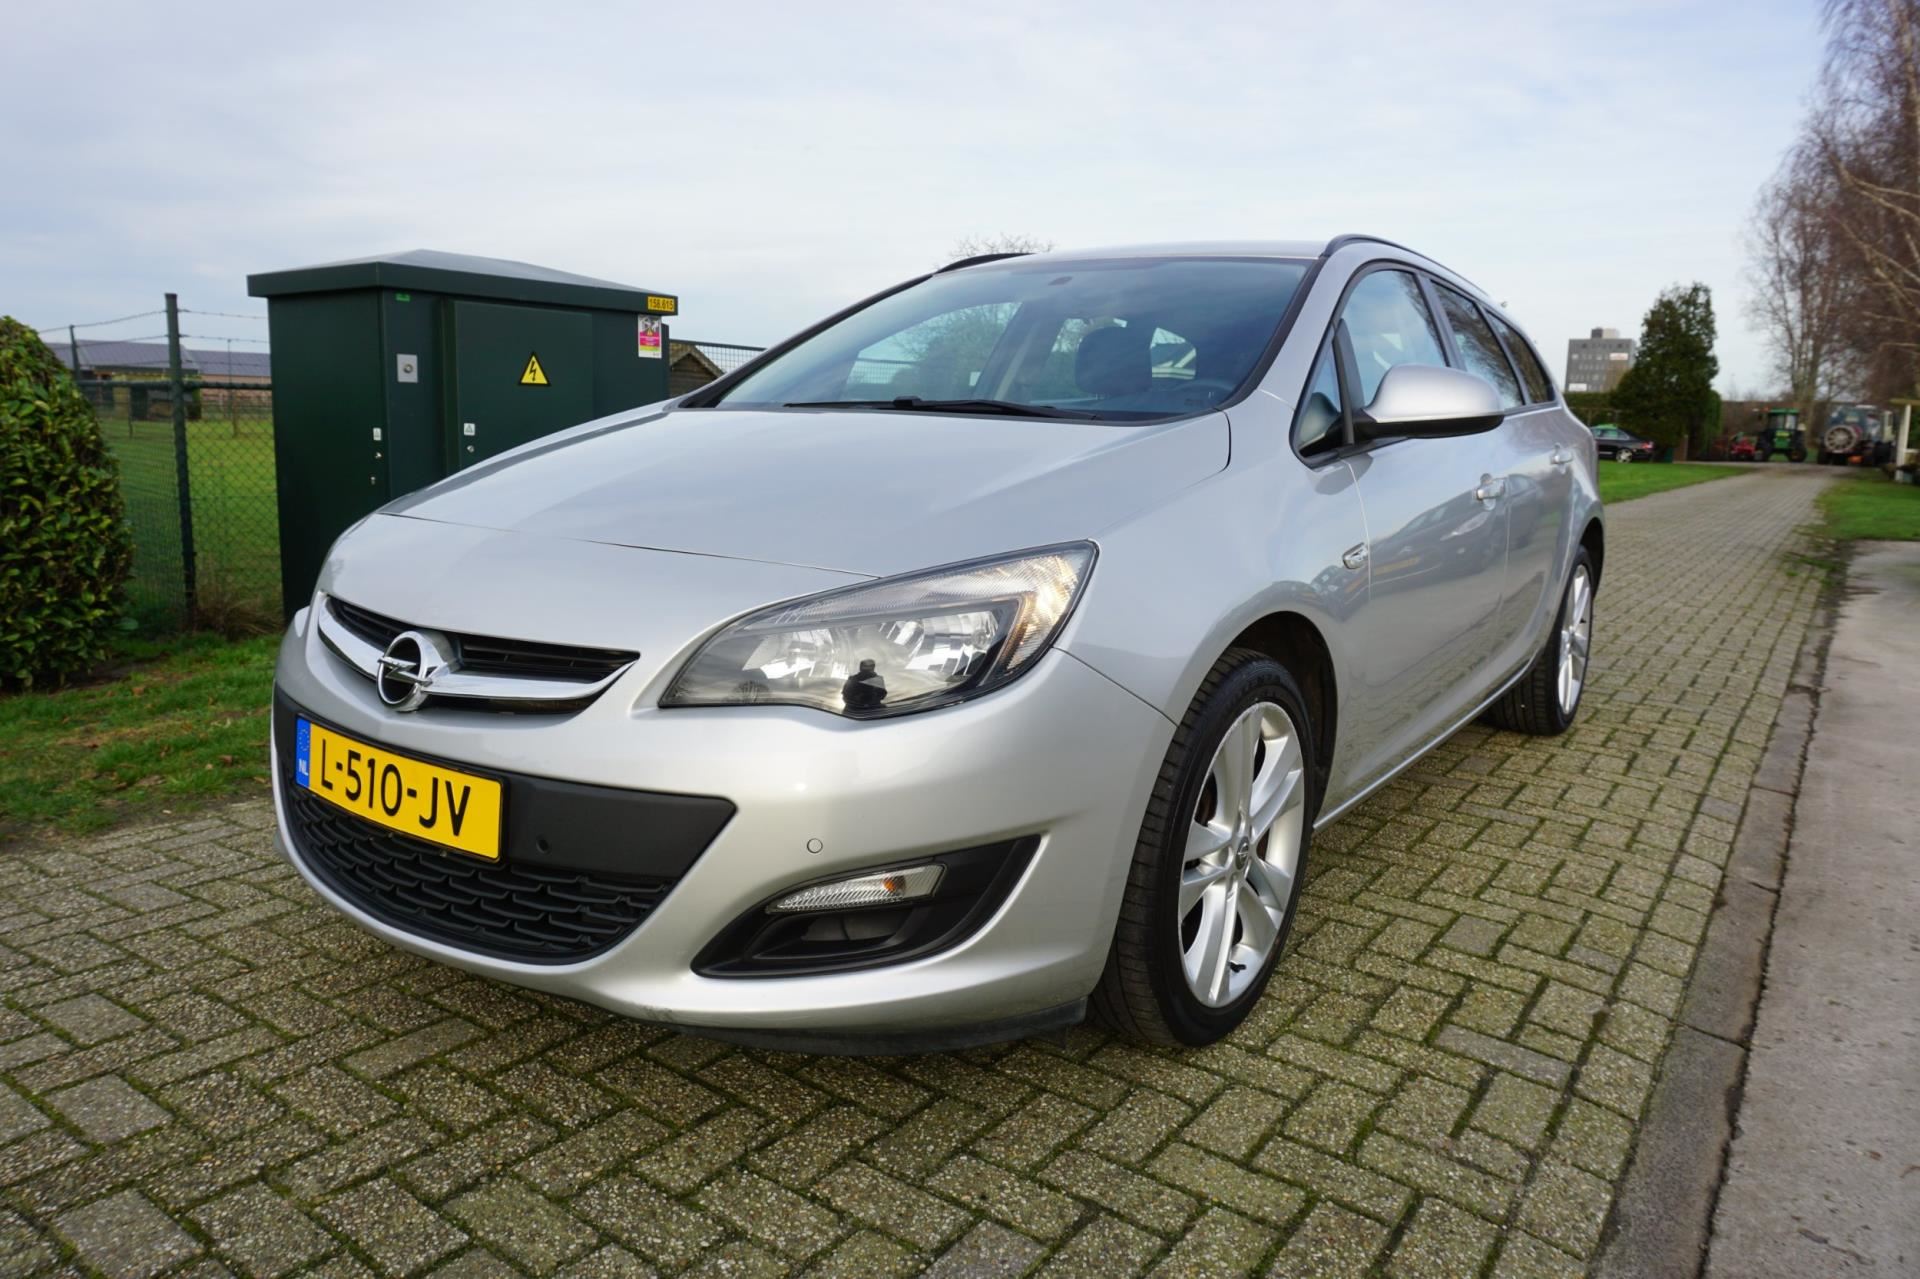 Kietelen gespannen definitief Opel Astra Sports Tourer - 1.4 Turbo 140 pk stationwagon Benzine uit 2014 -  www.debetaalbareauto.nl